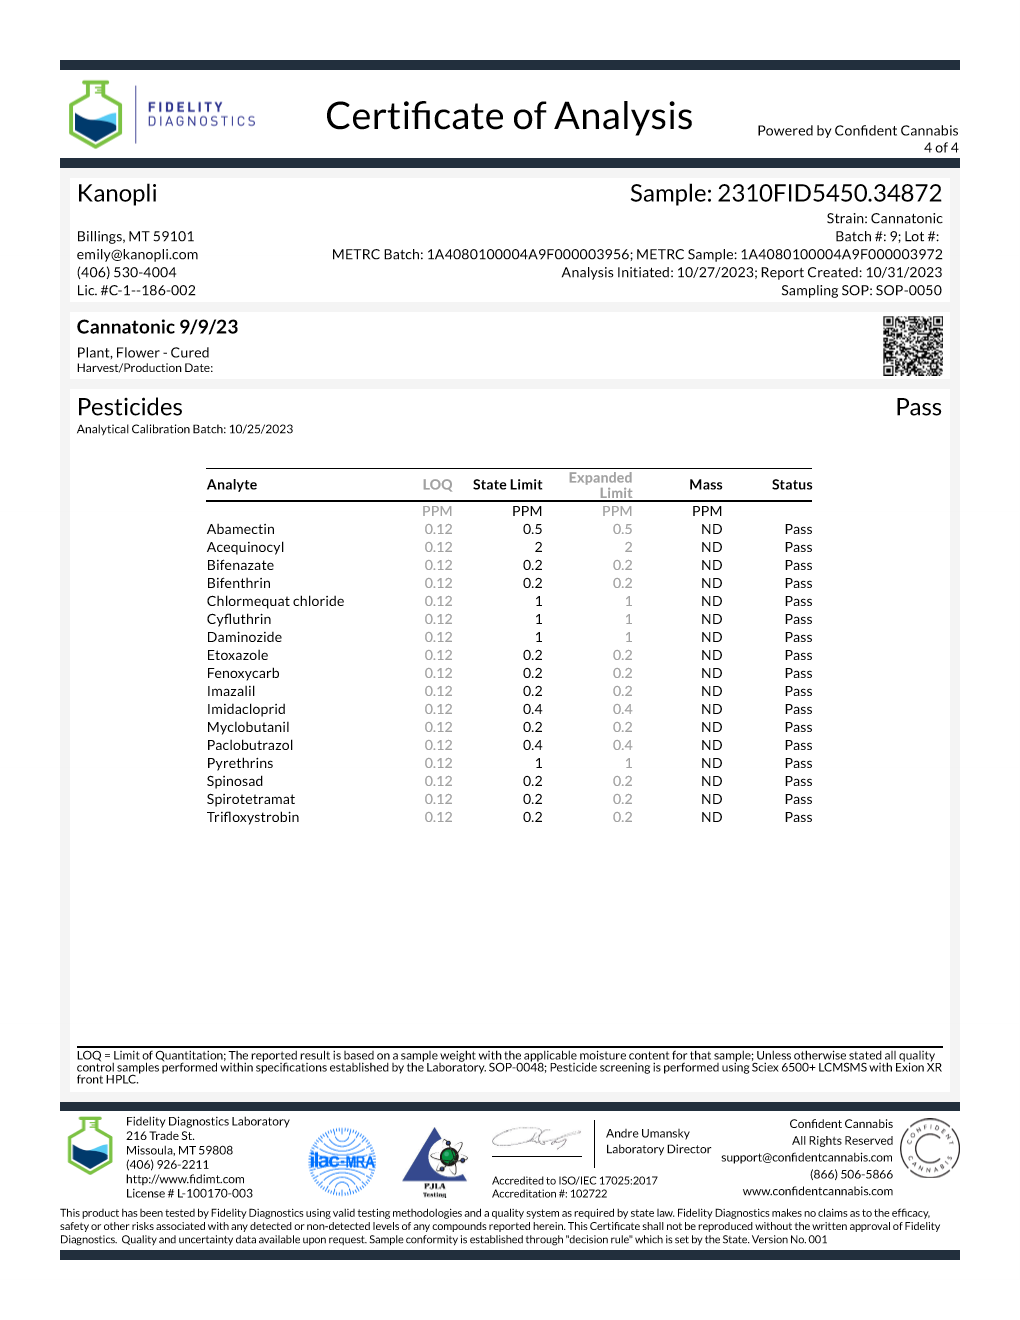 Cannatonic - CBD Dominant 7.19% CBD, 7.20% THC (Sept. 2023) MEDICAL